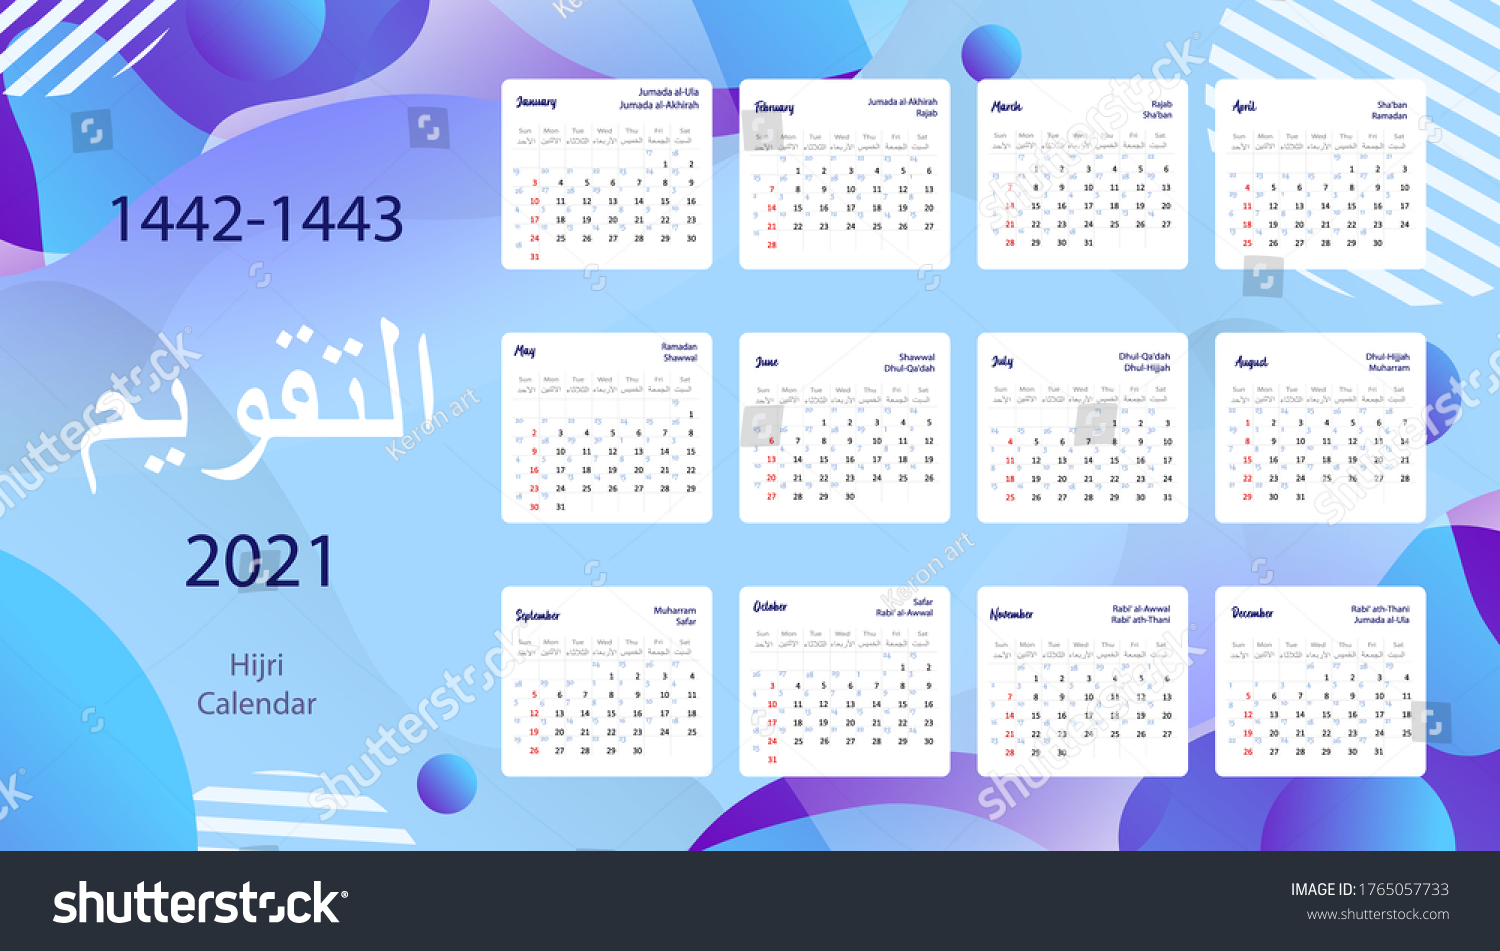 2021 calendar 1443 hijri Islamic Calendar